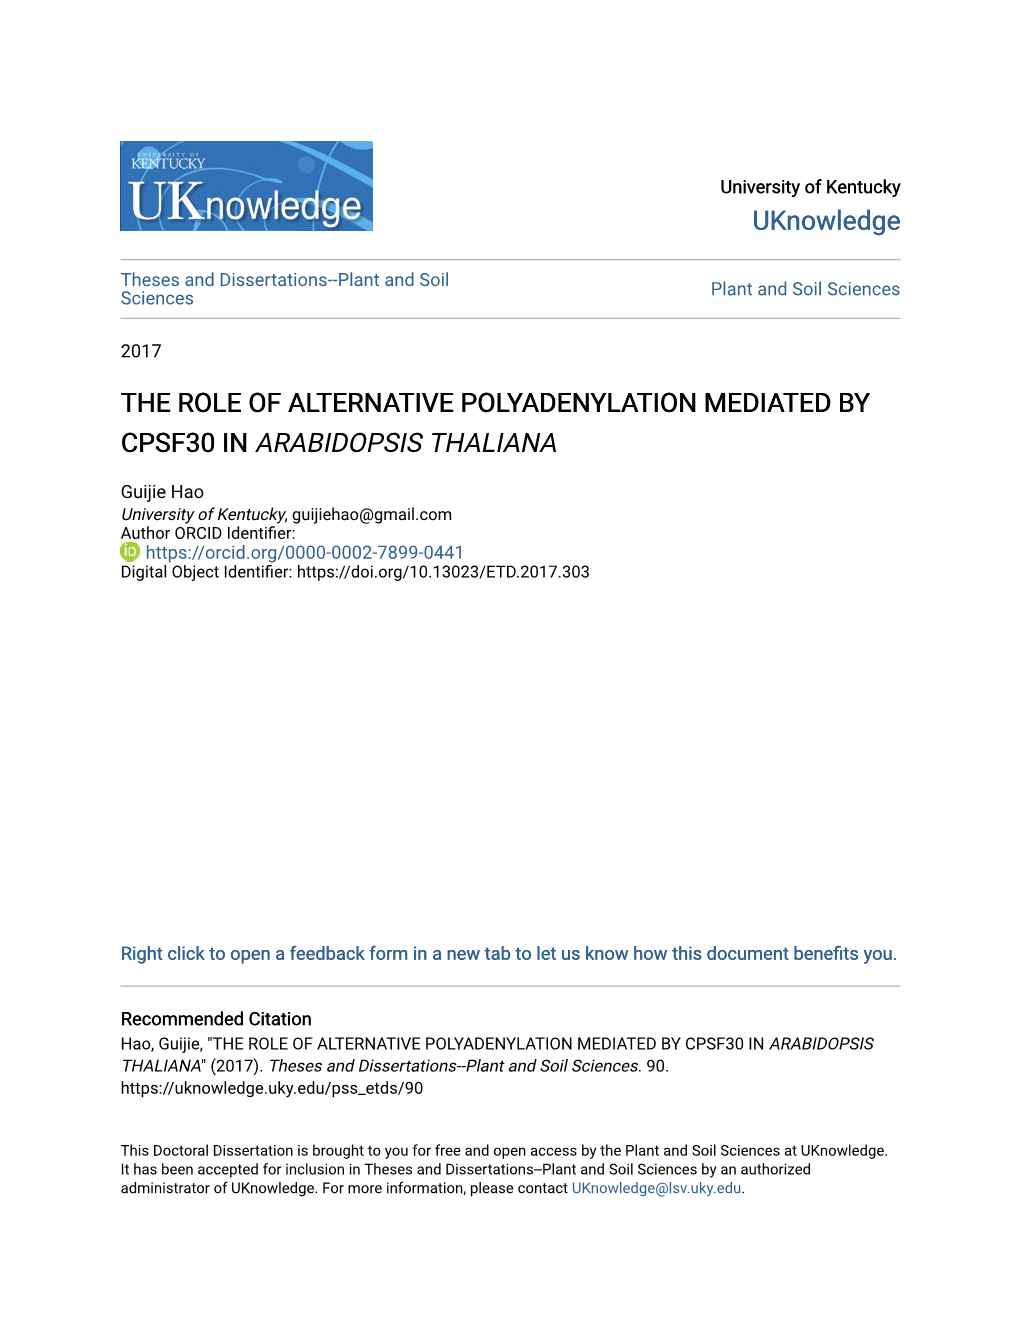 The Role of Alternative Polyadenylation Mediated by Cpsf30 in Arabidopsis Thaliana